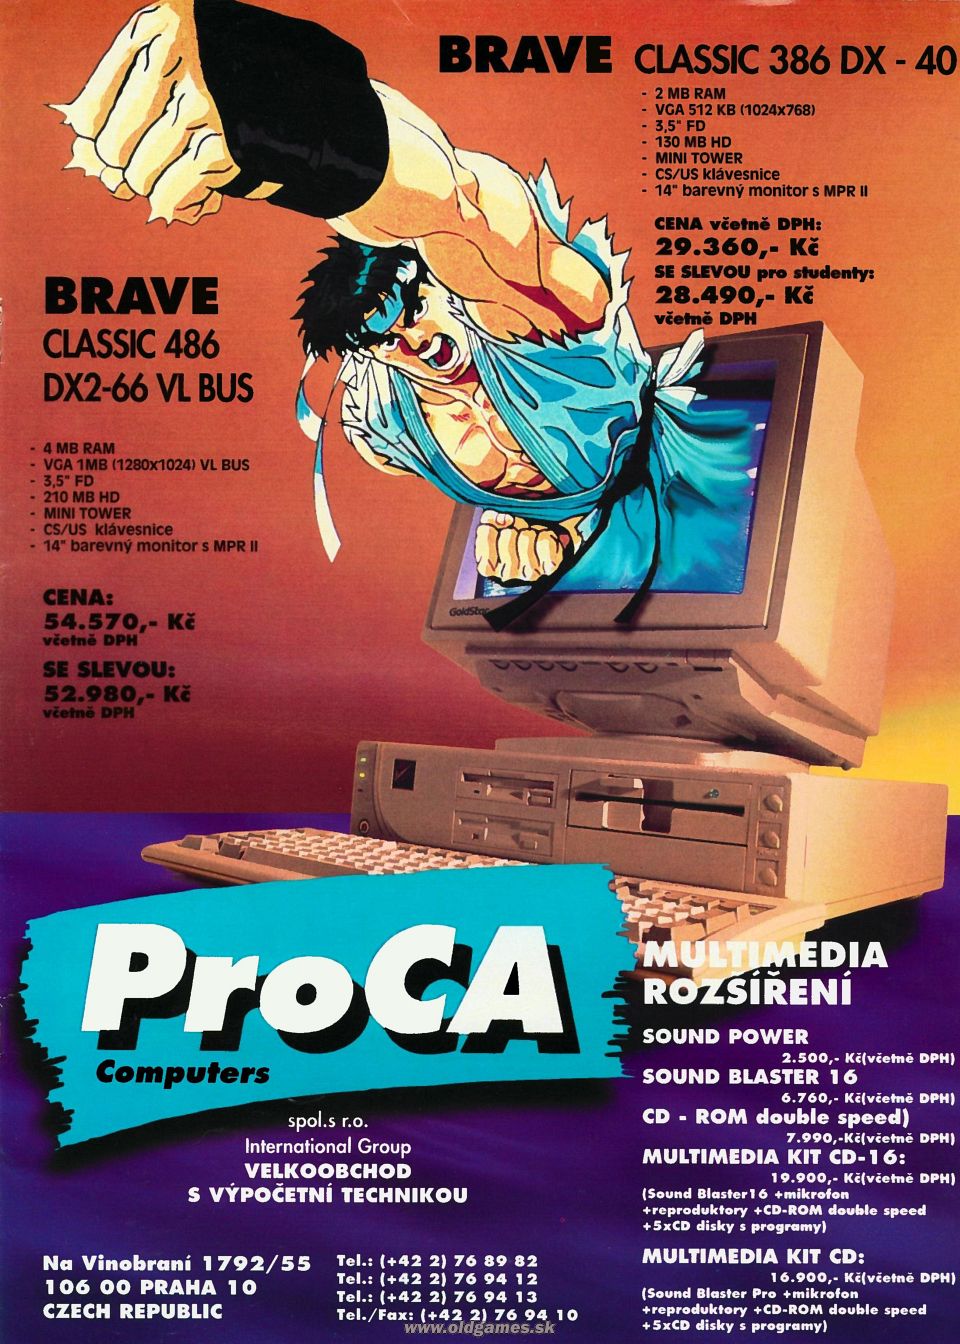 reklama - ProCA